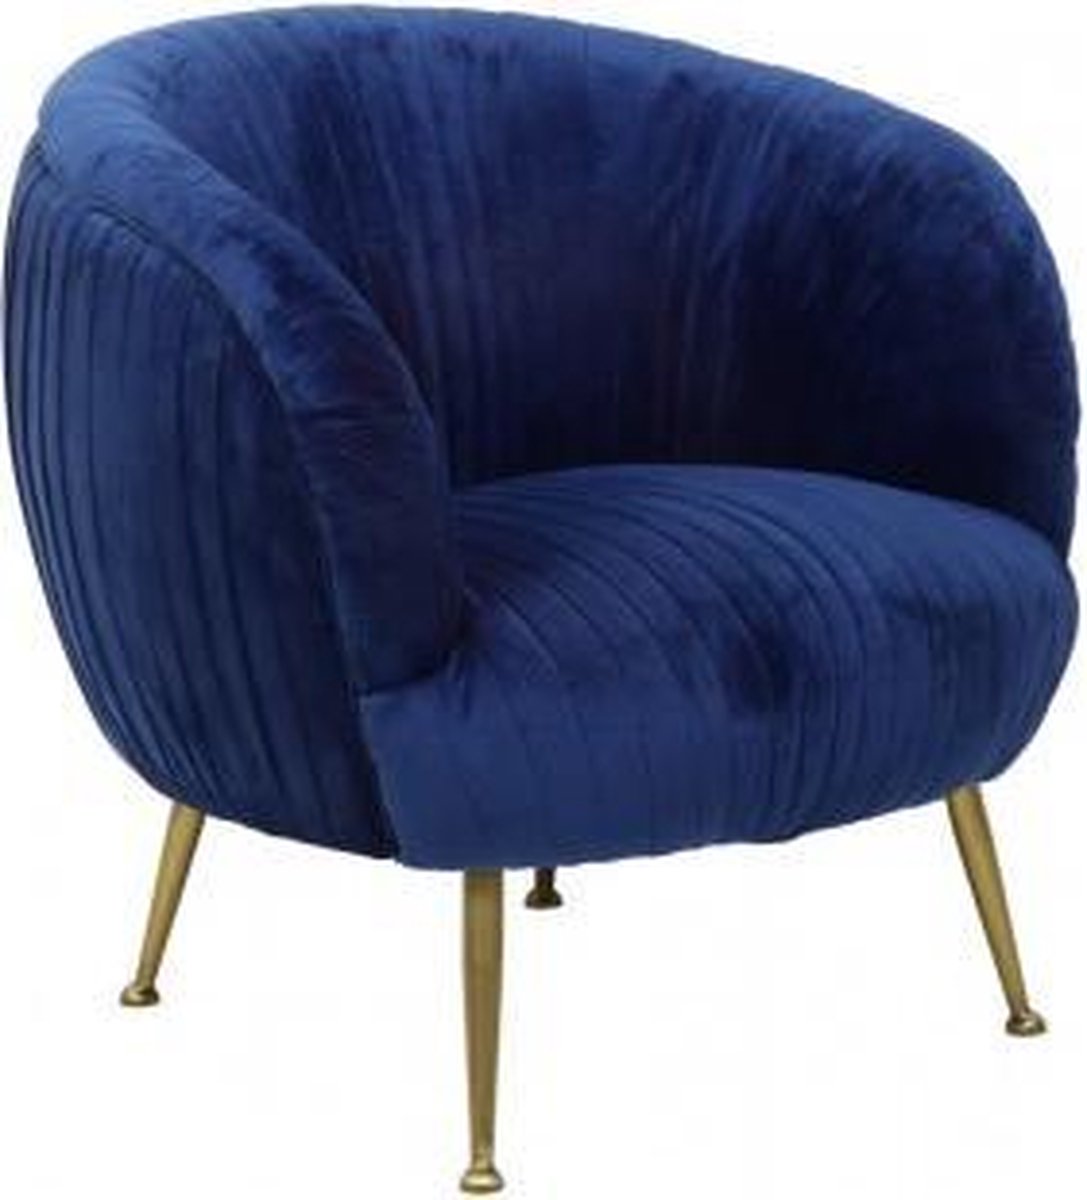 Stoel velvet blauw fauteuil goudkleurige poten79x75x75cm rond | bol.com